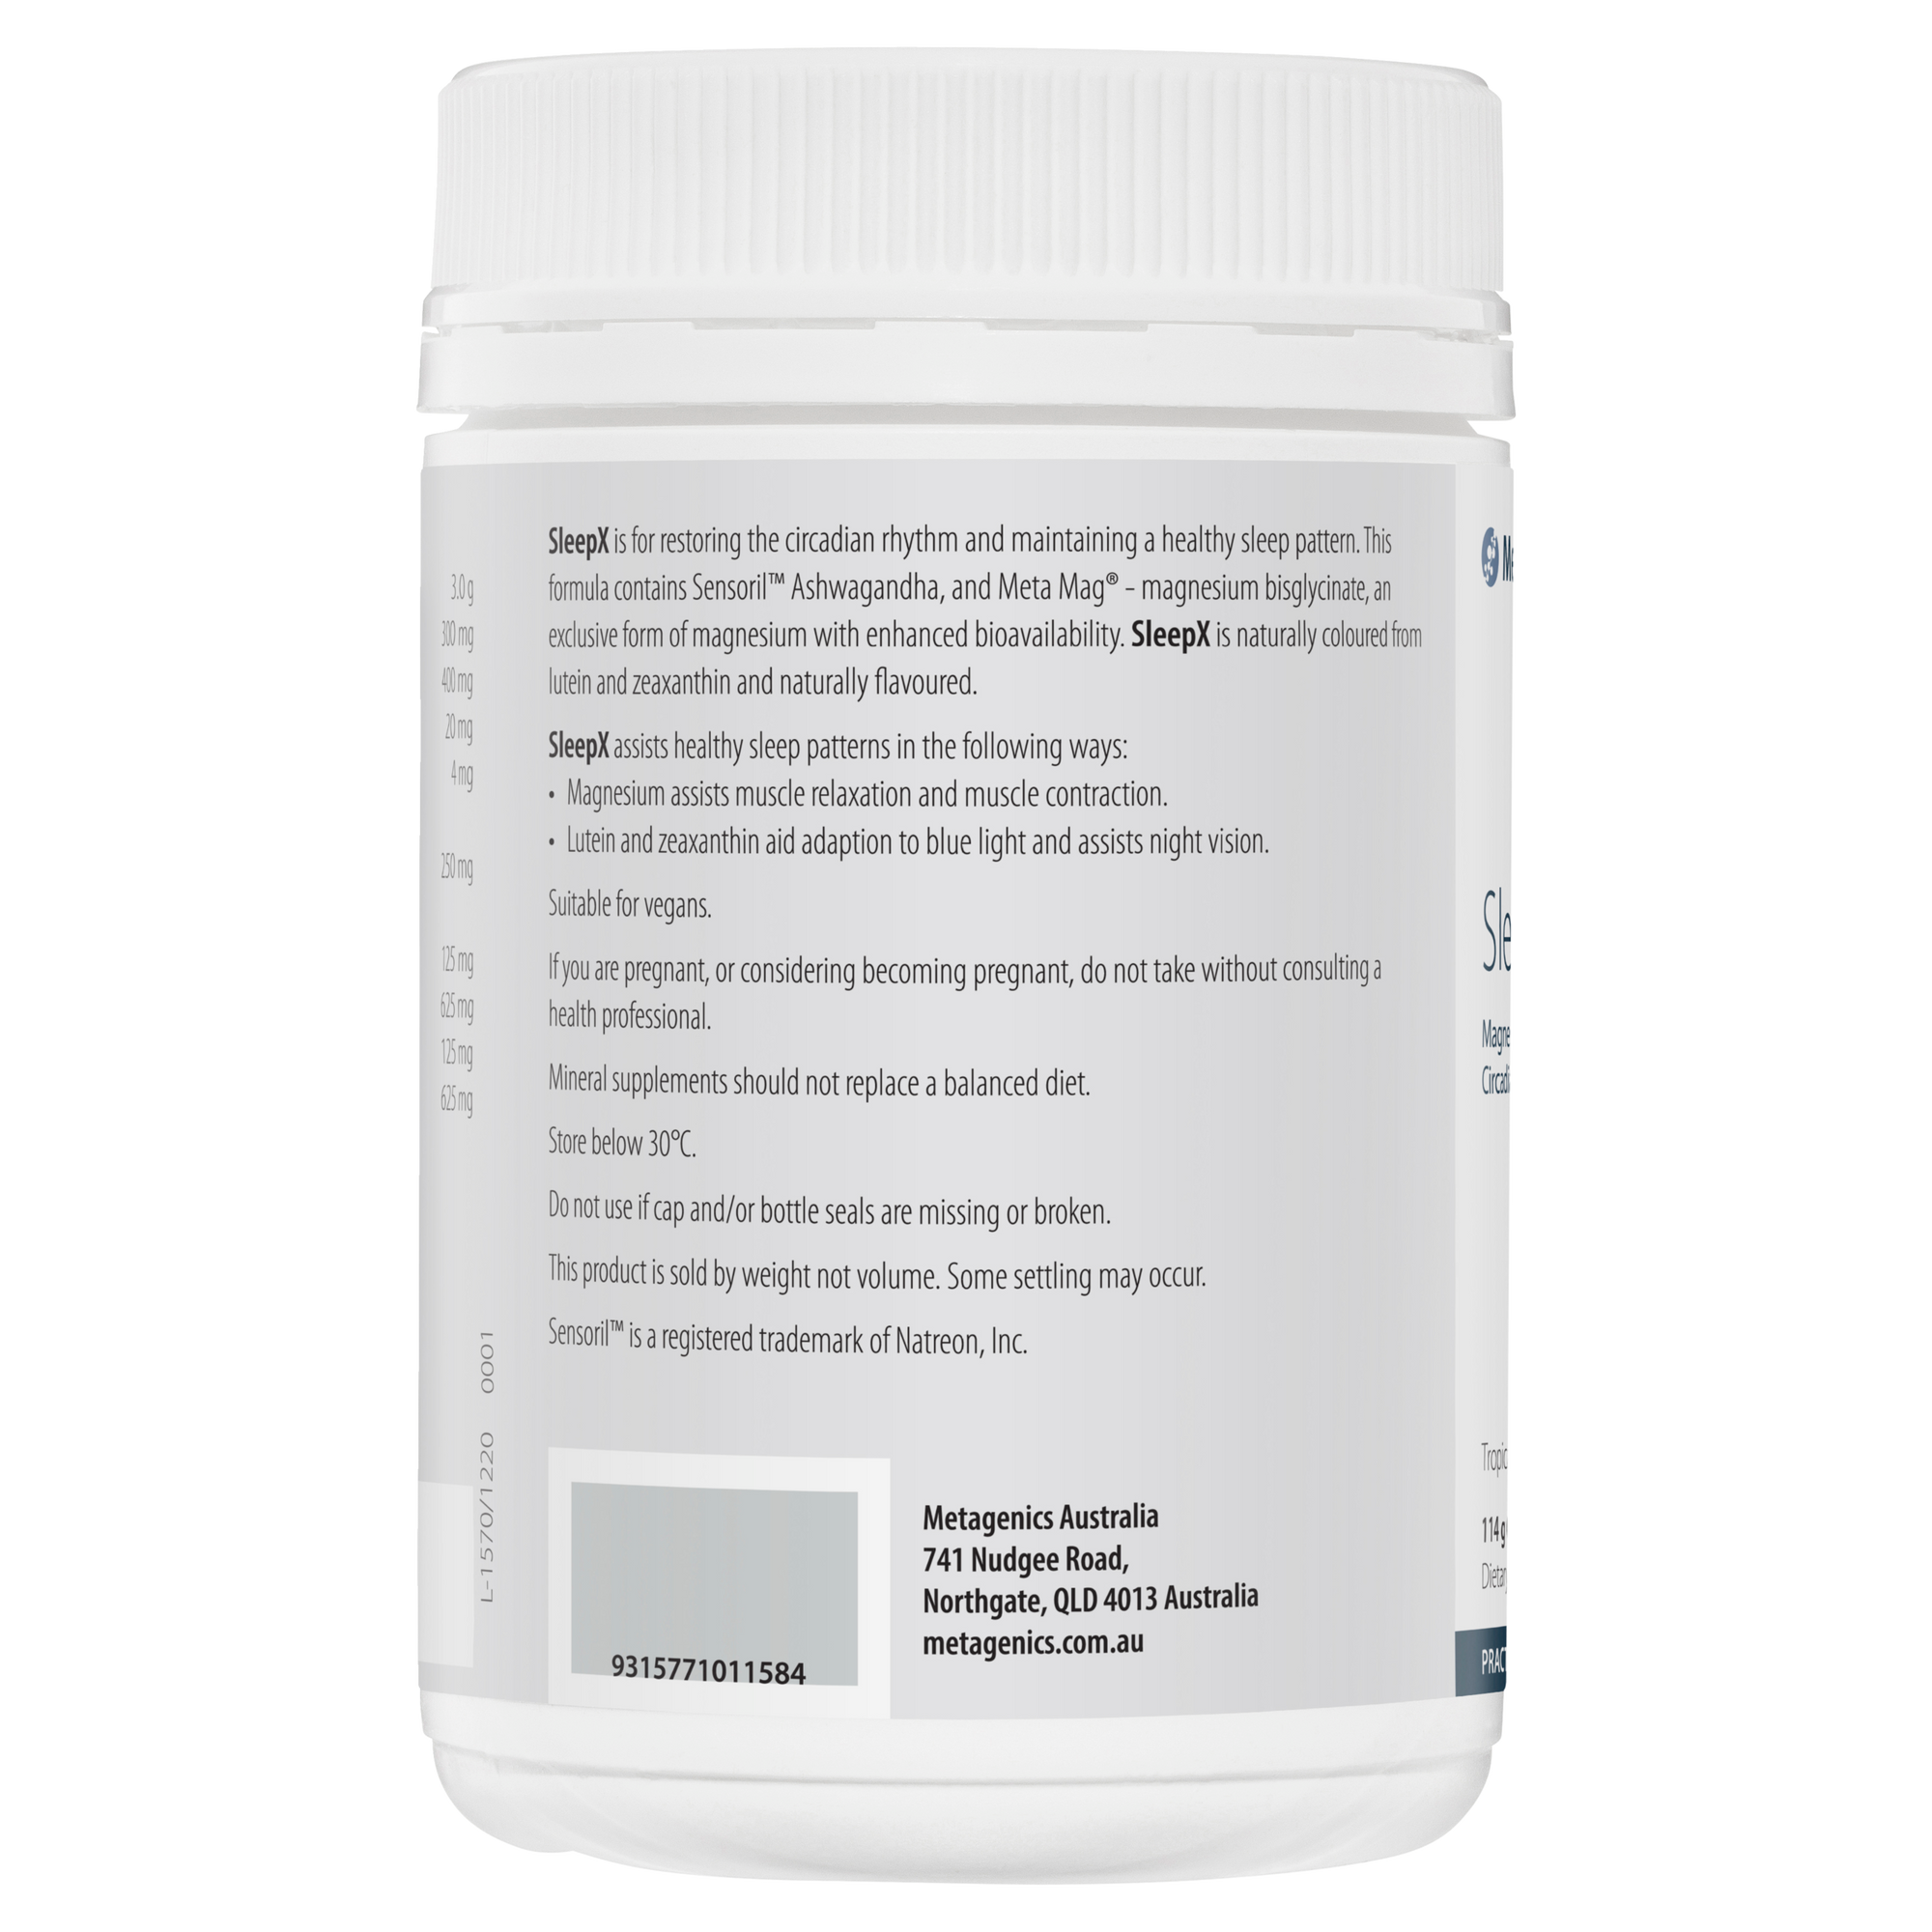 Metagenics SleepX Oral Powder Tropical Flavour 114 g